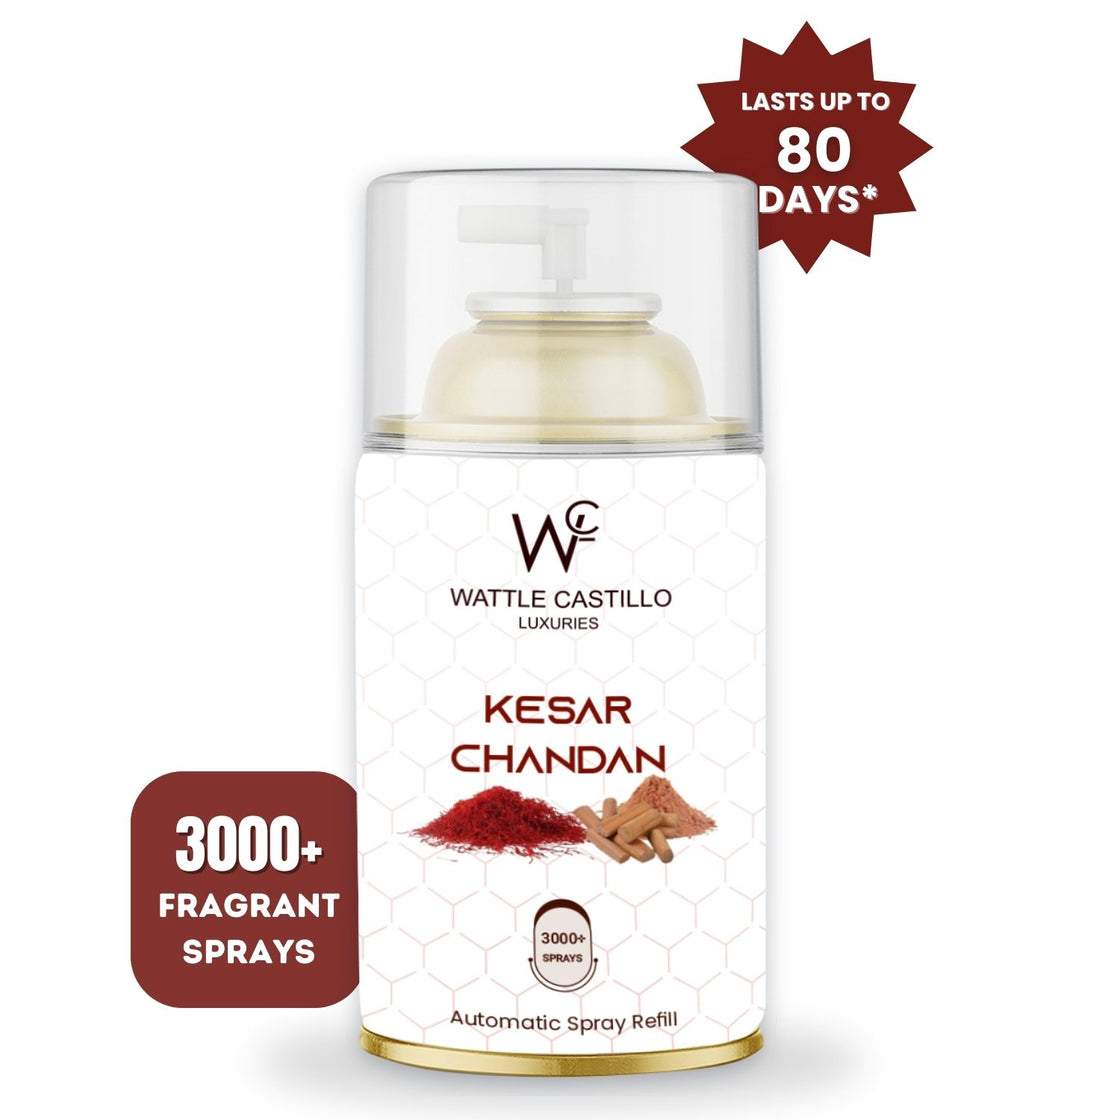 Kesar Chandan Automatic Room Fresheners Refill (265ml) & 3000+ Sprays Guaranteed Lasts up to 80 days